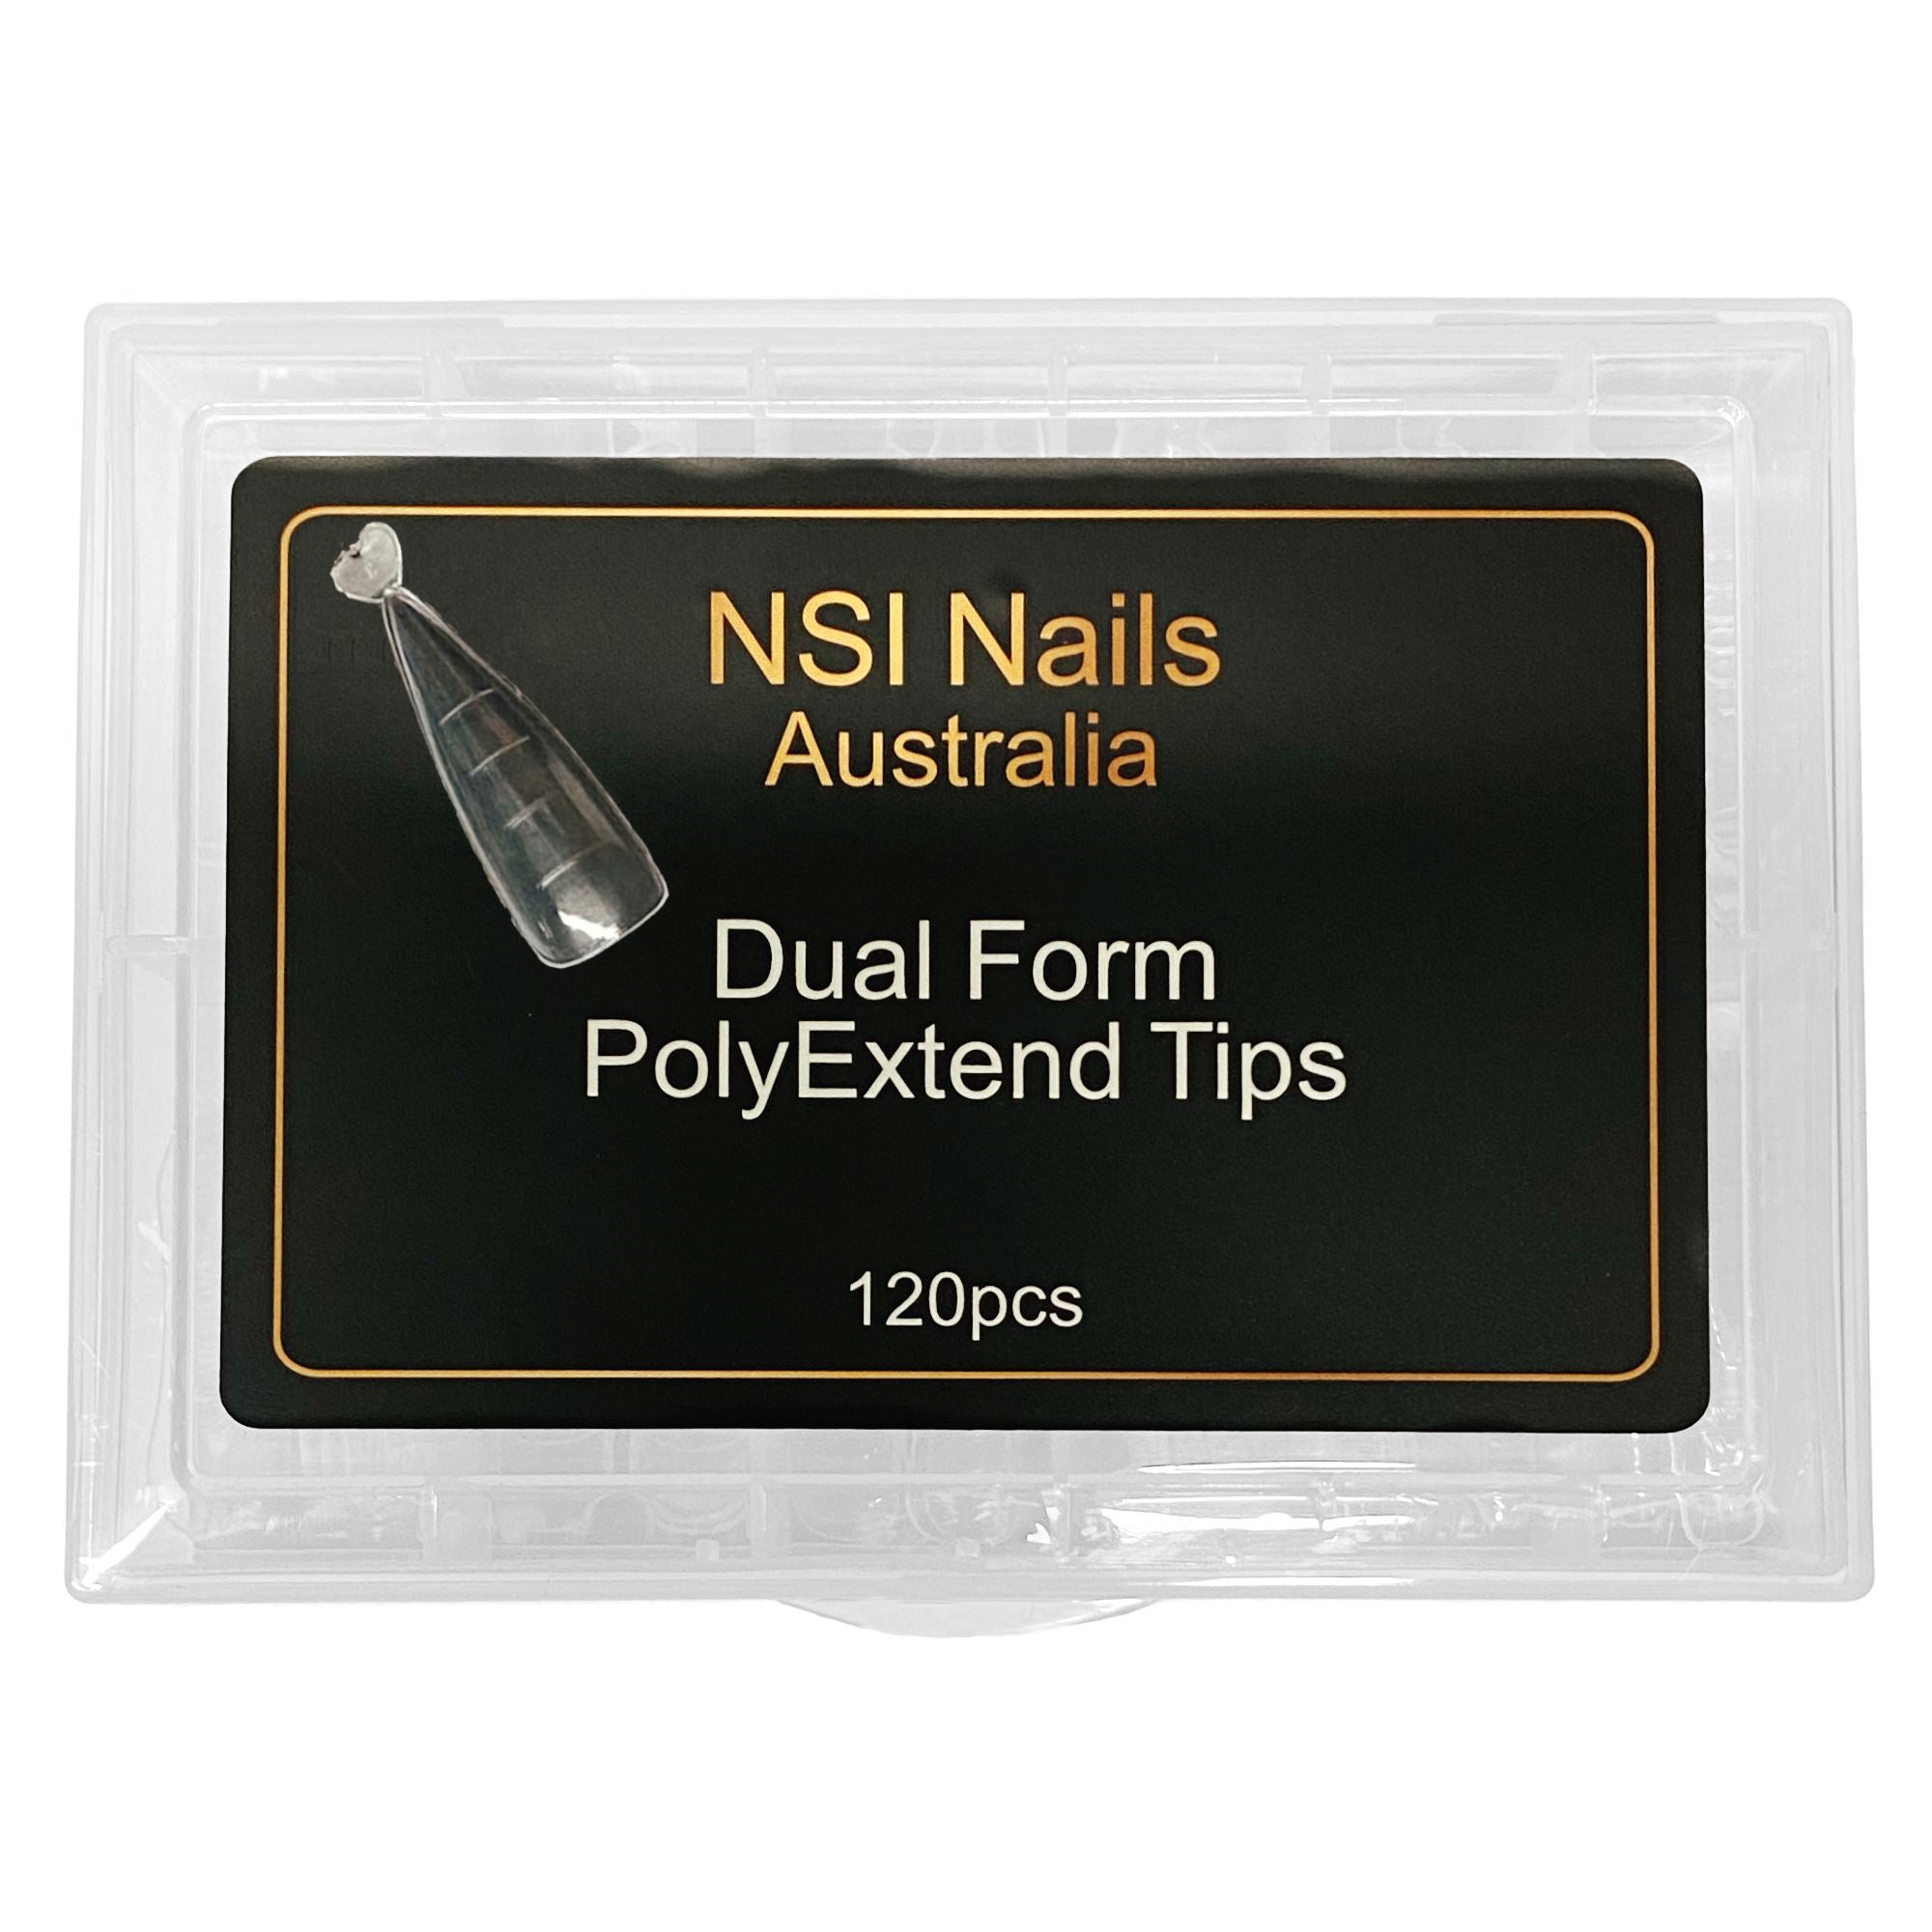 Dual Form PolyExtend Tips 120pcs - NSI Australia